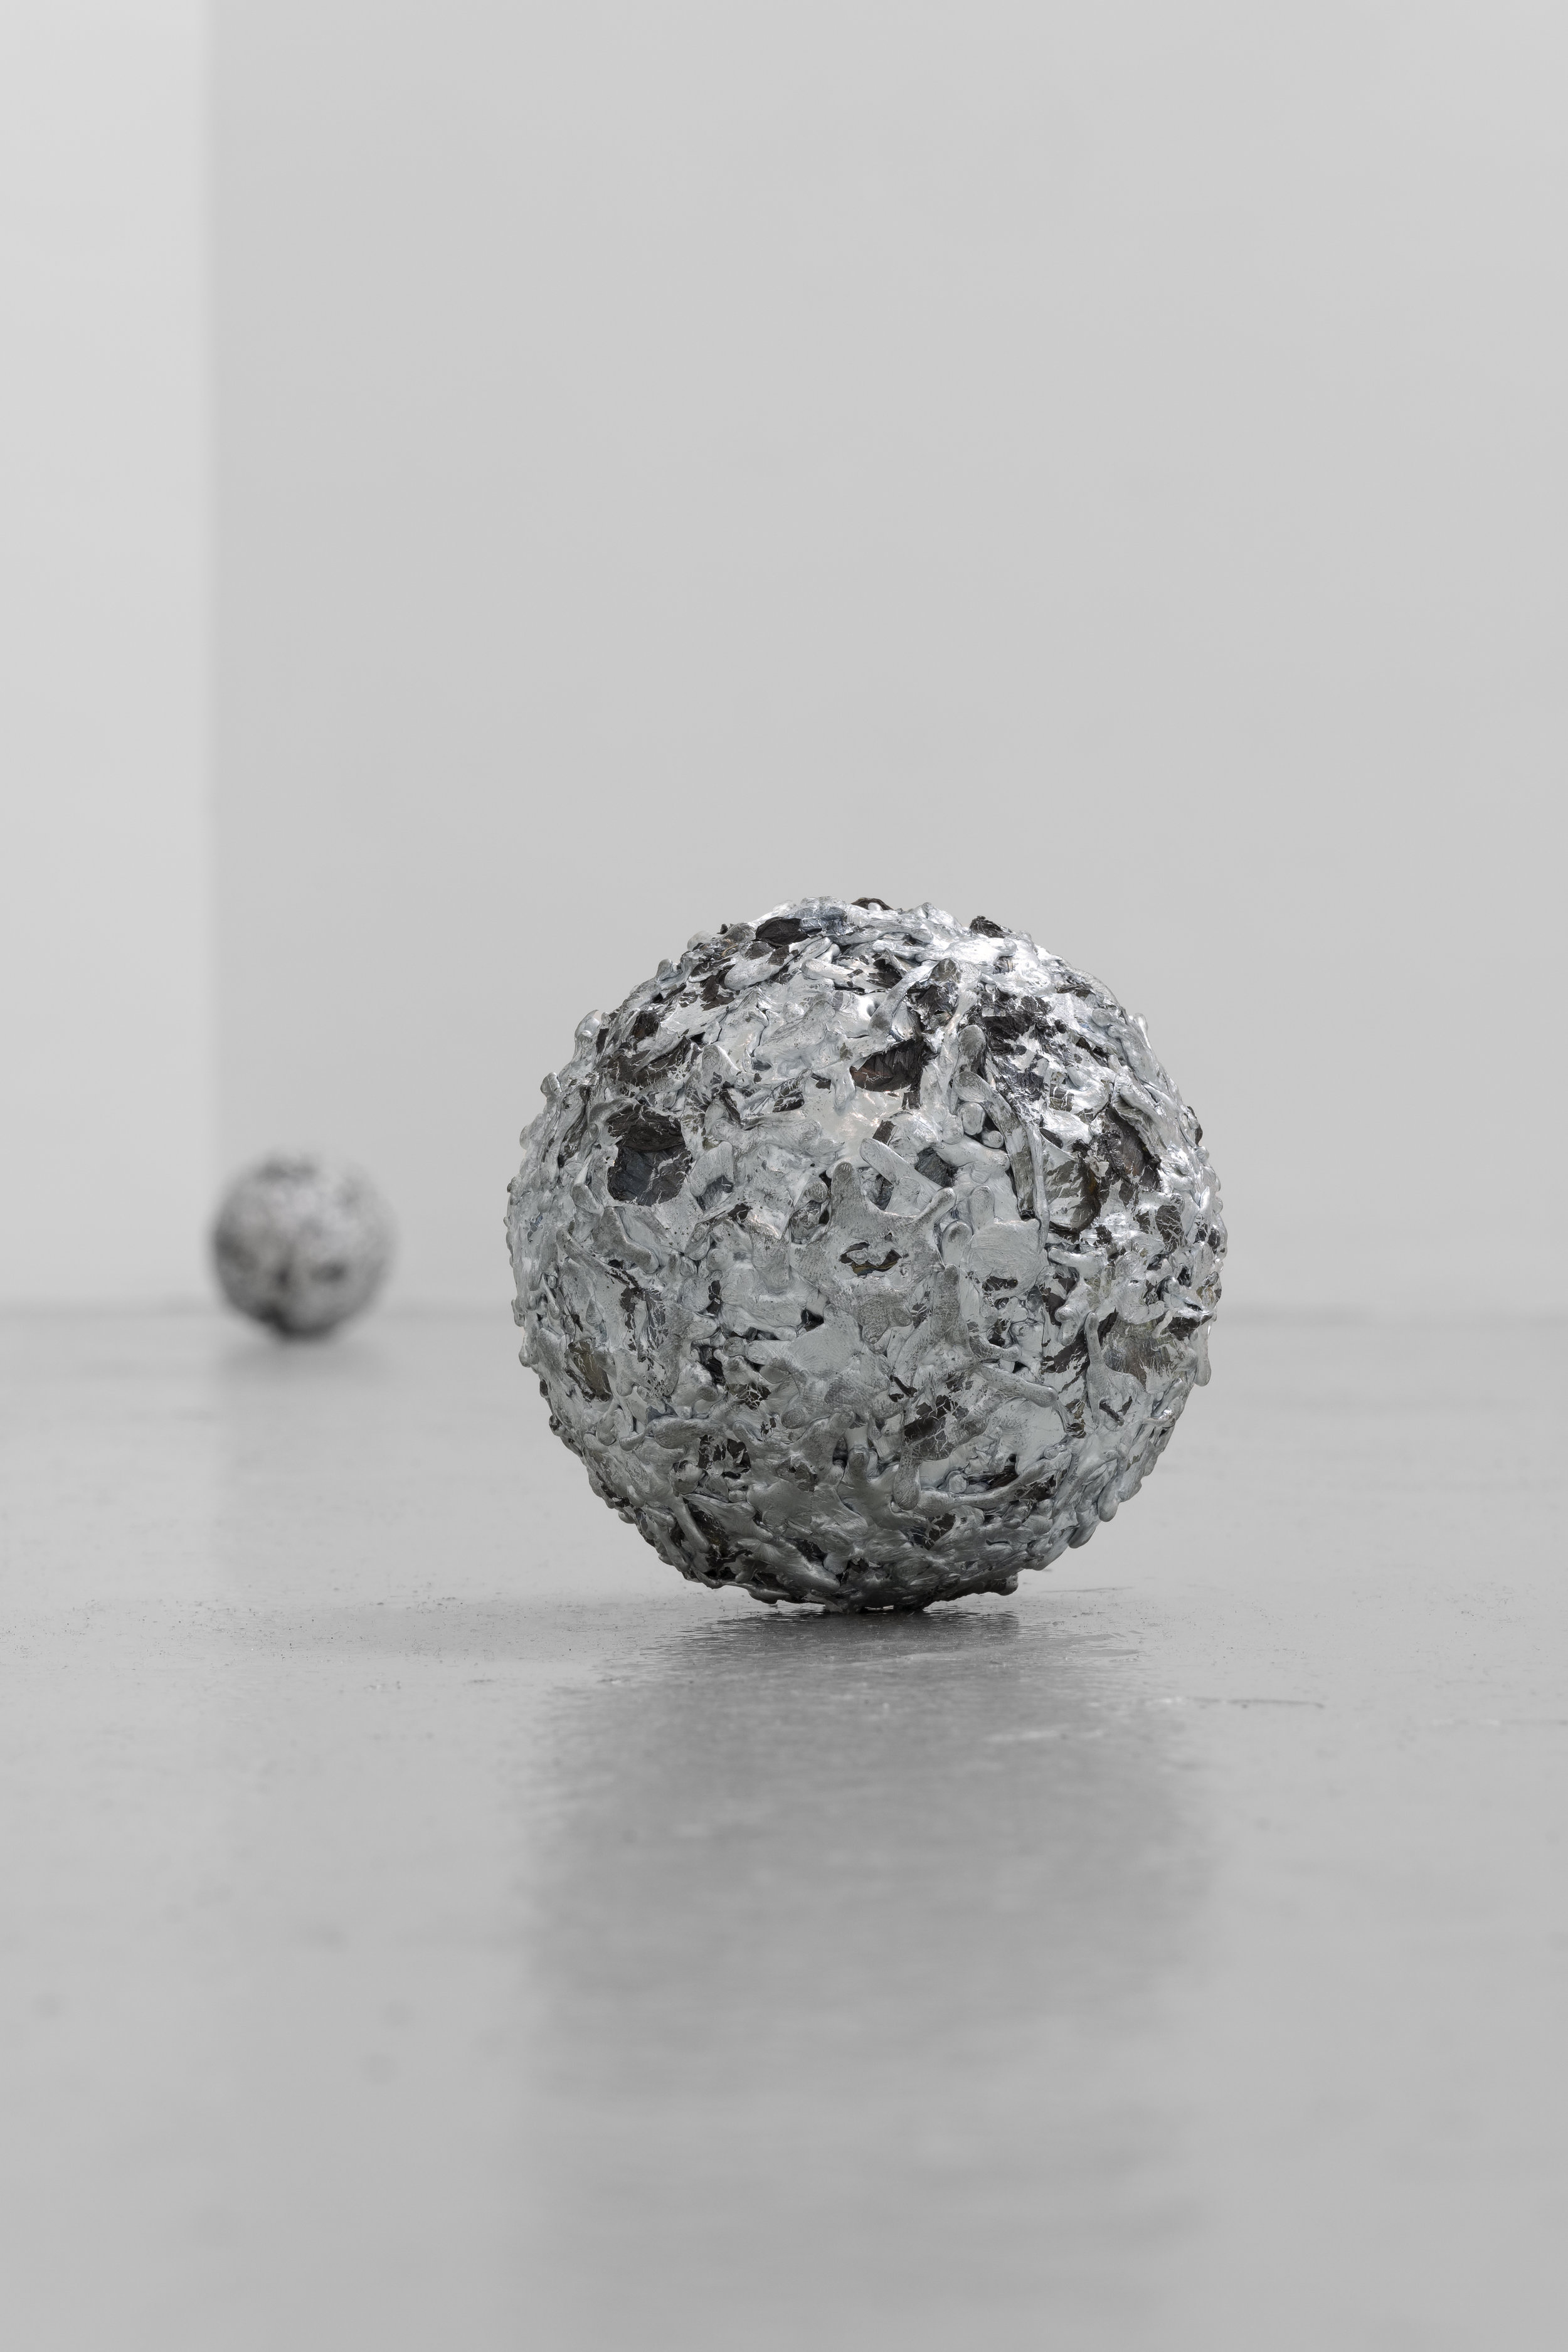  Matt Browning,  Untitled,  2018, Zinc, copper, 4 x 4 inches (10.16 x 10.16 cm) 